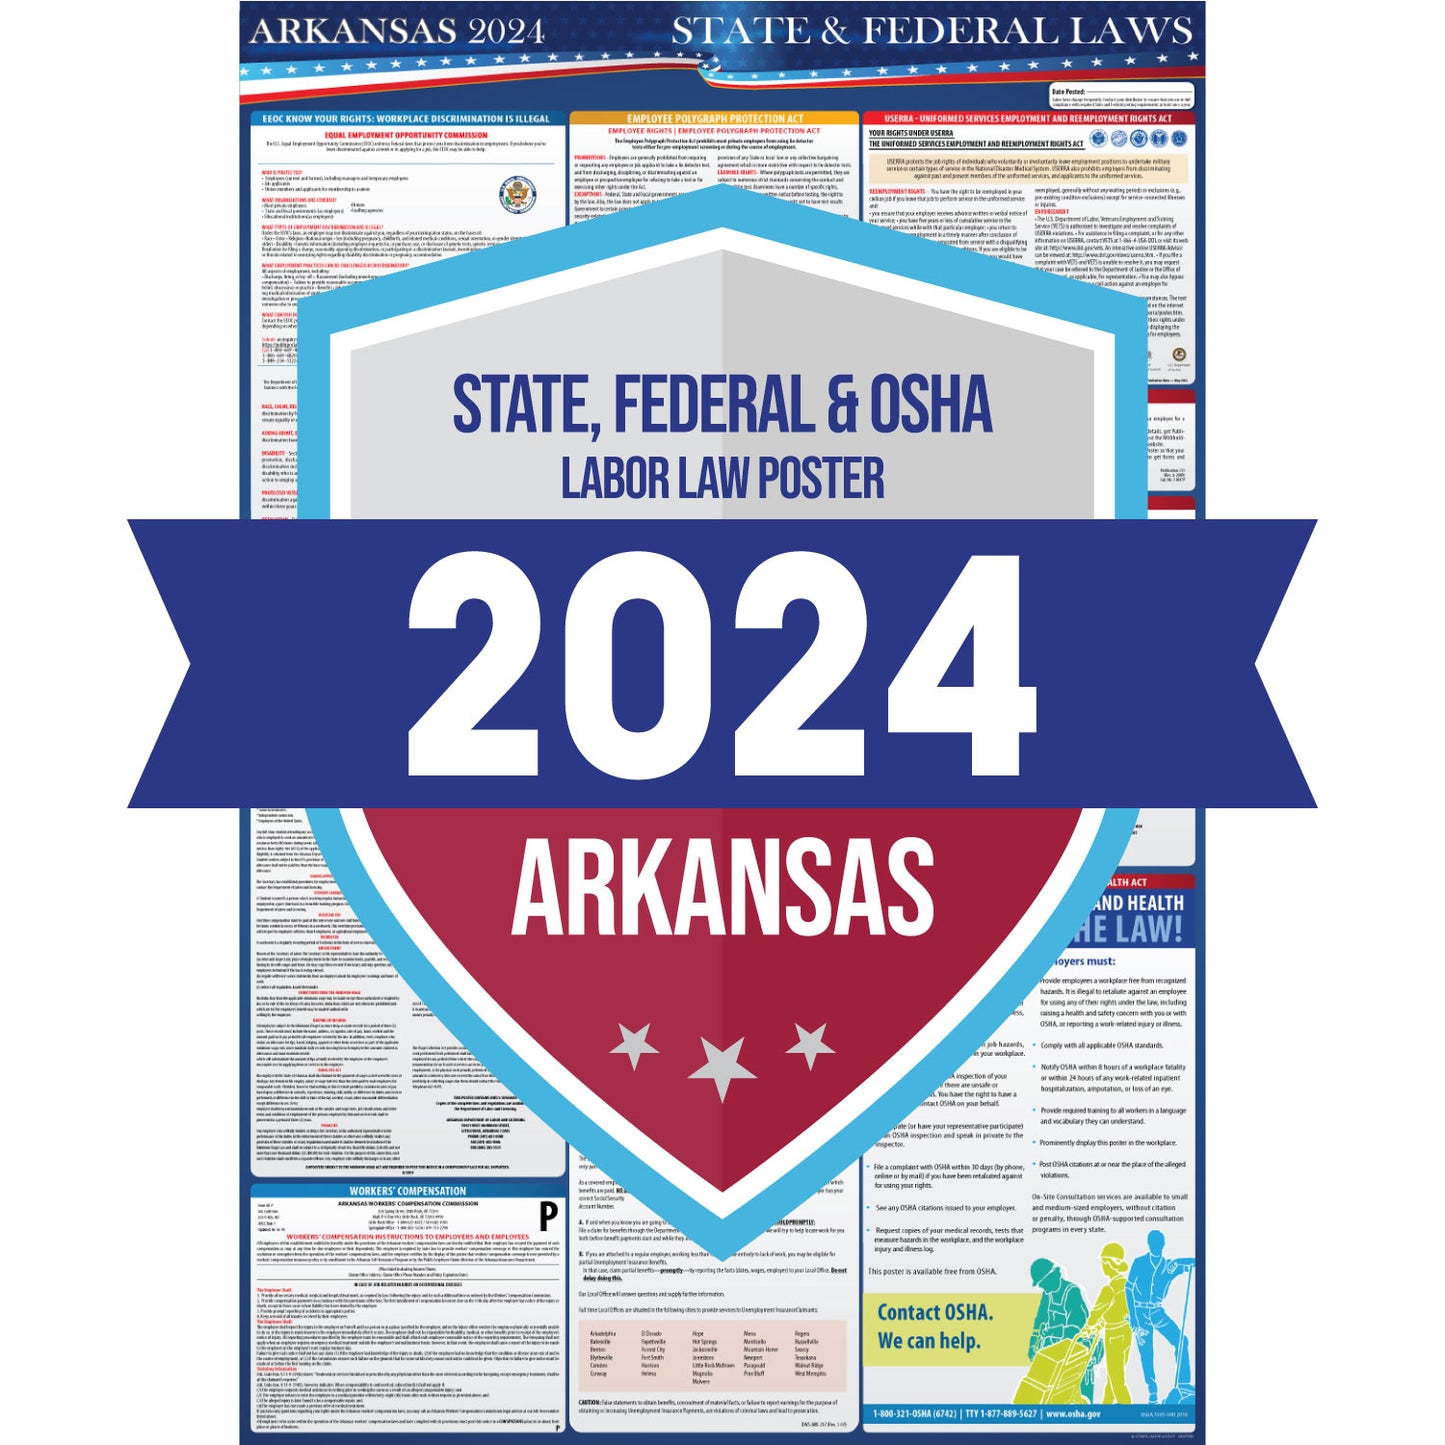 Arkansas Labor Law Poster